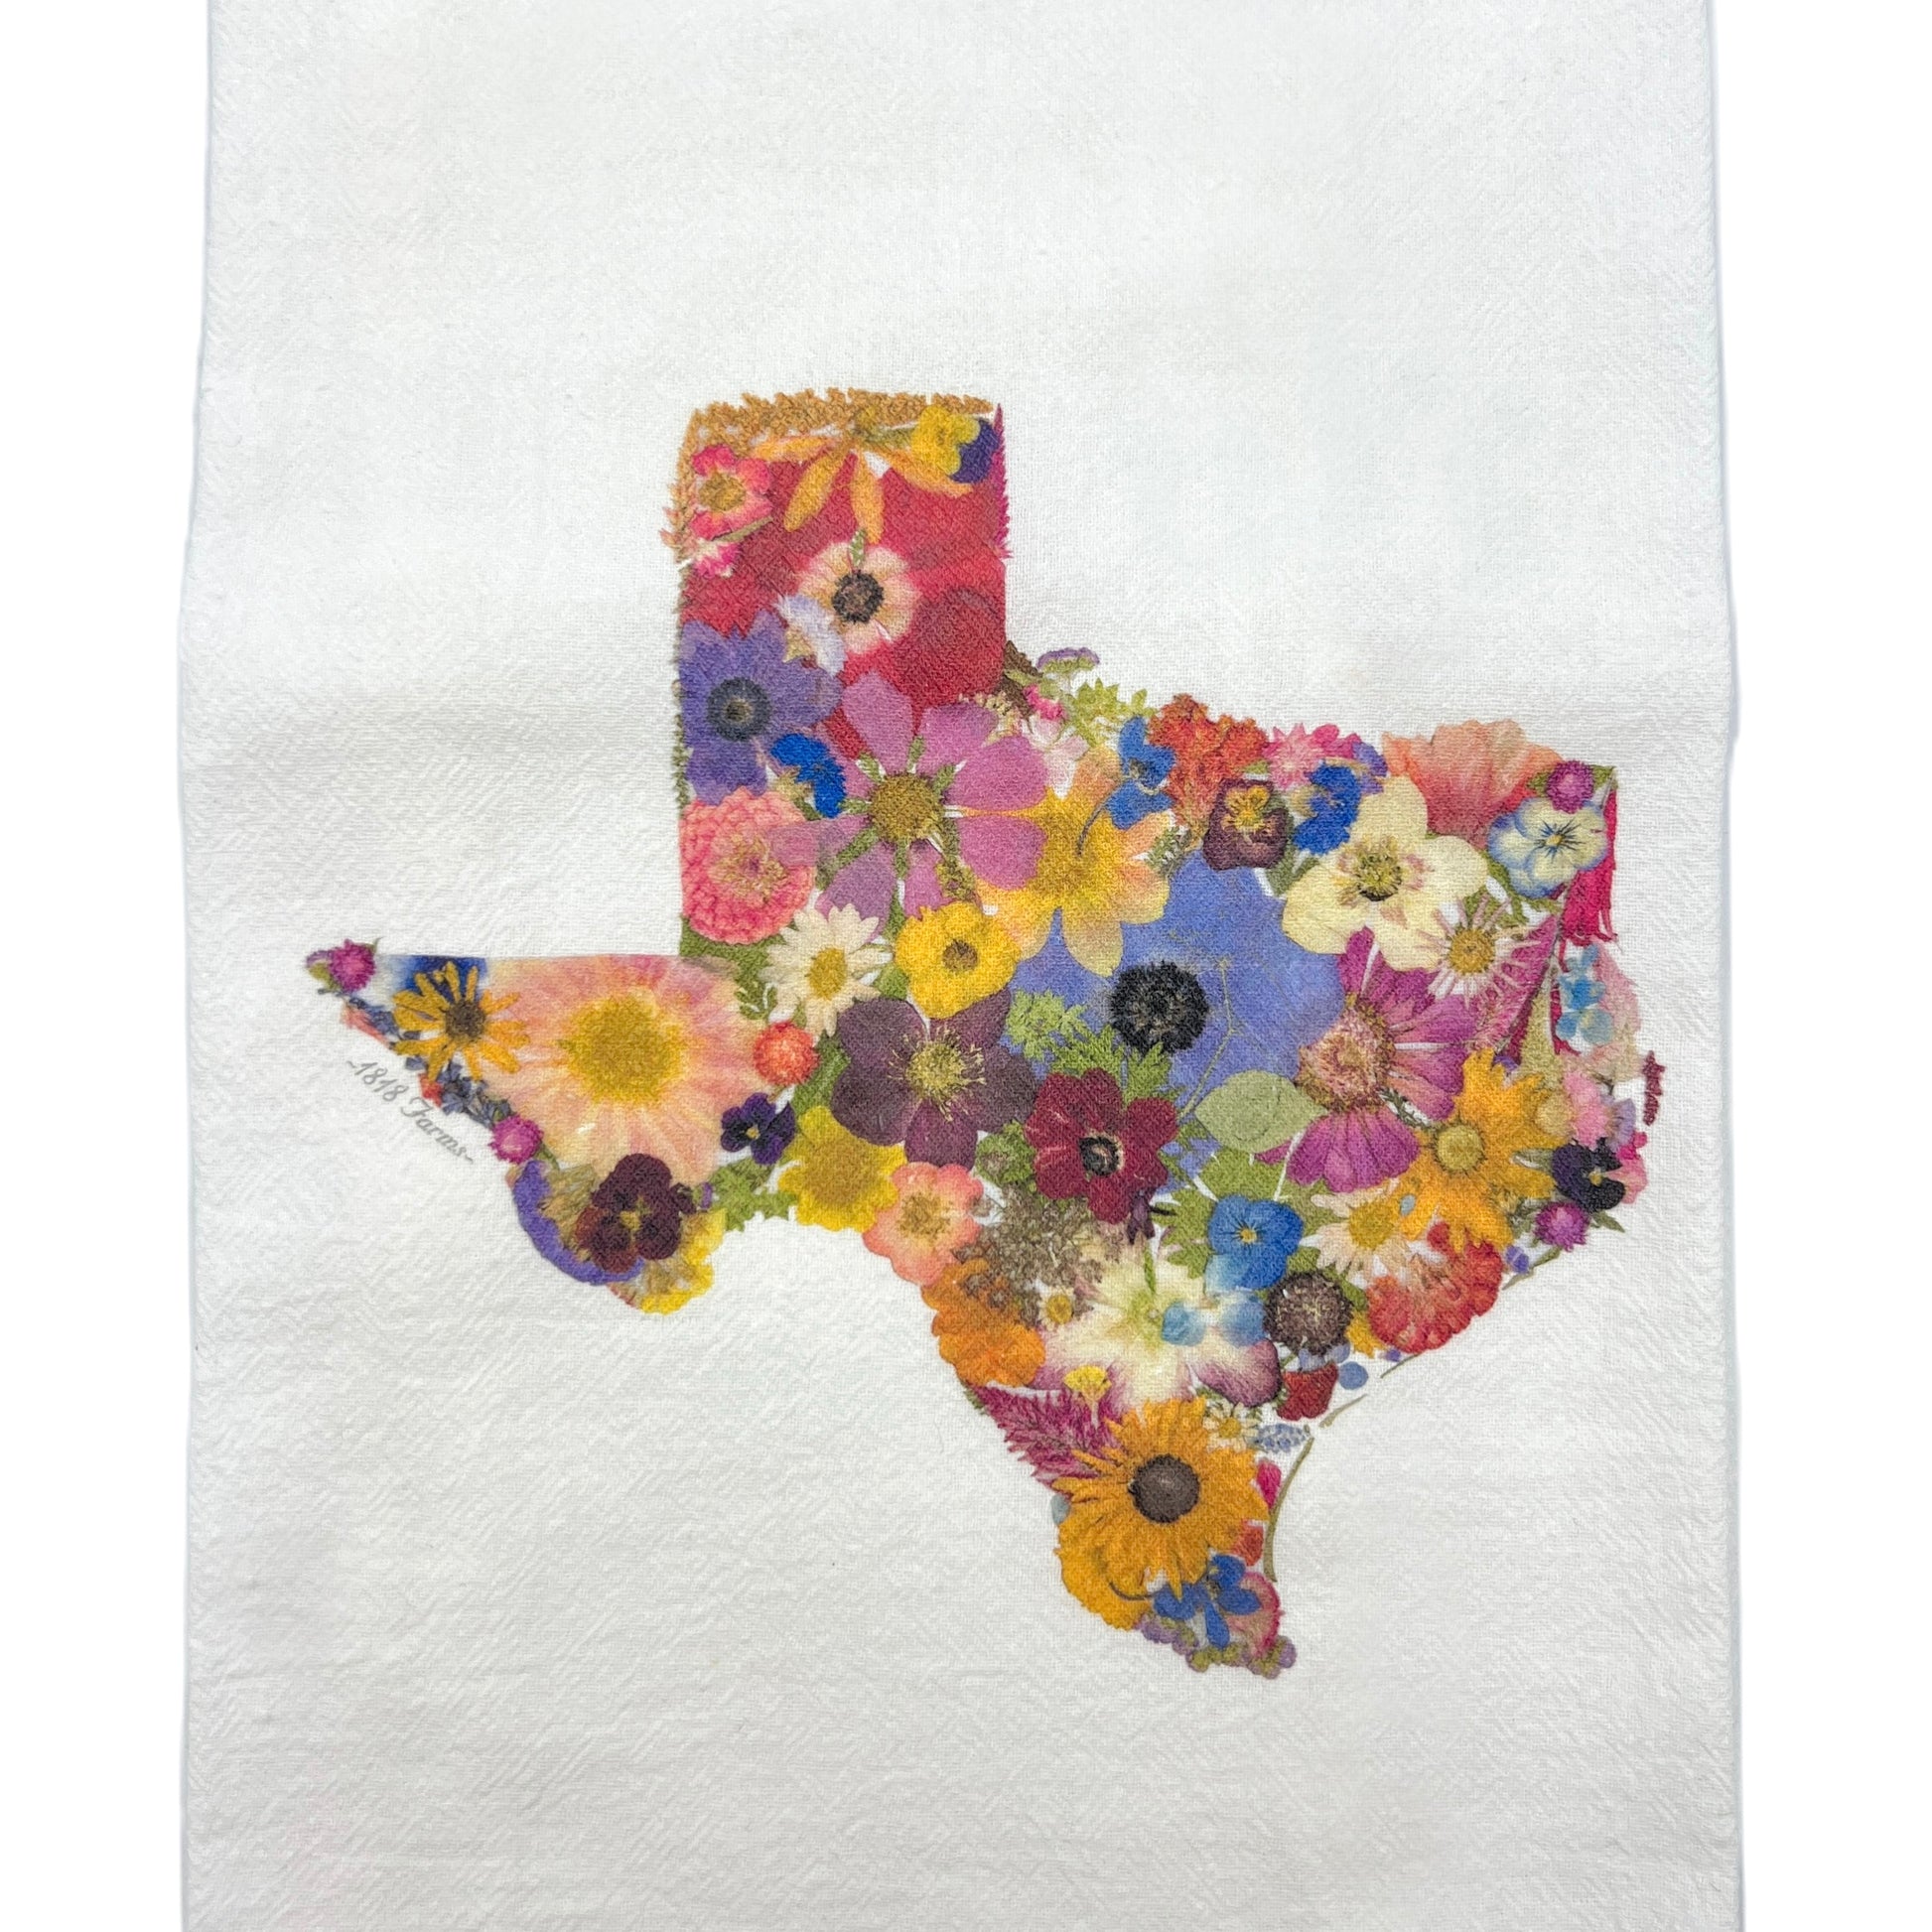 Texas Themed Flour Sack Towel  - "Where I Bloom" Collection Towel 1818 Farms   